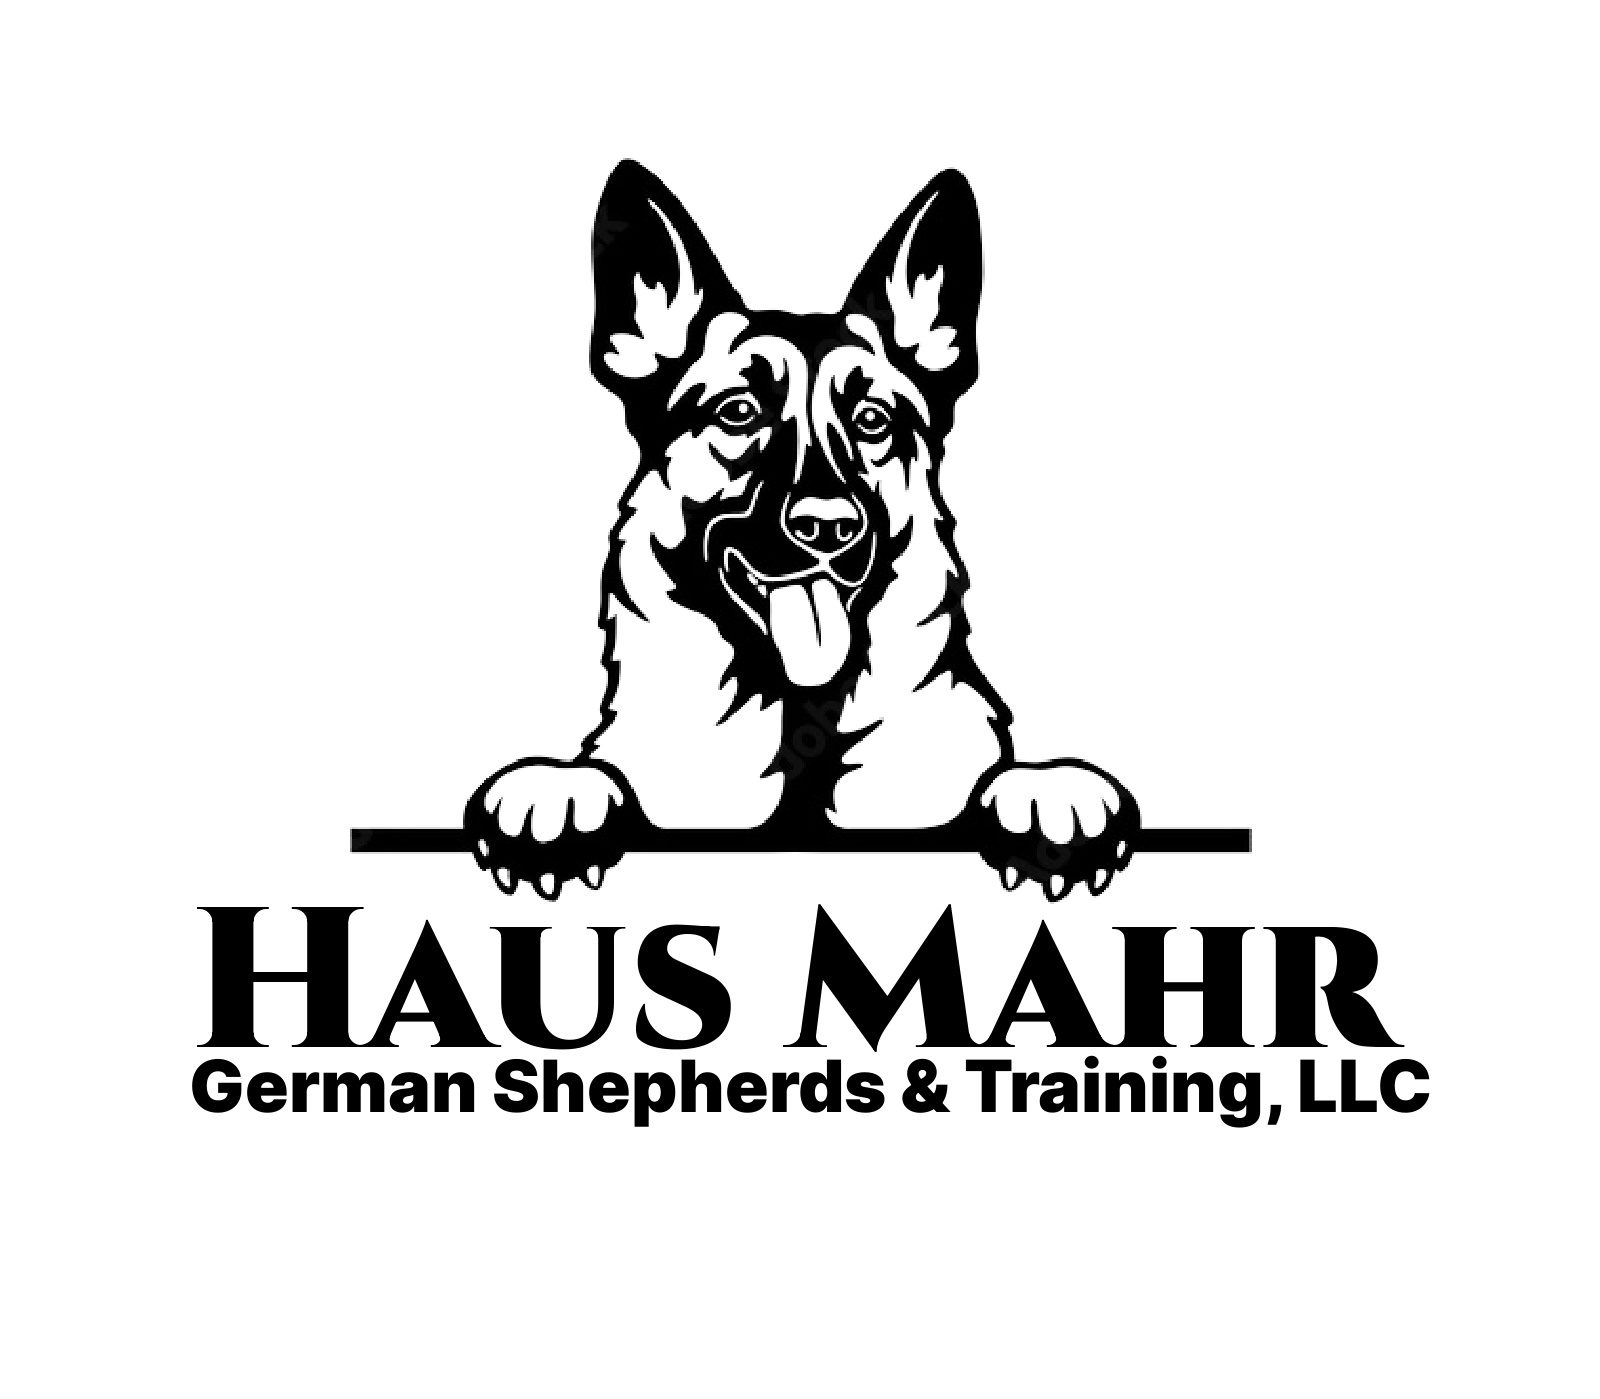 Haus Mahr German Shepherds & Training, LLC